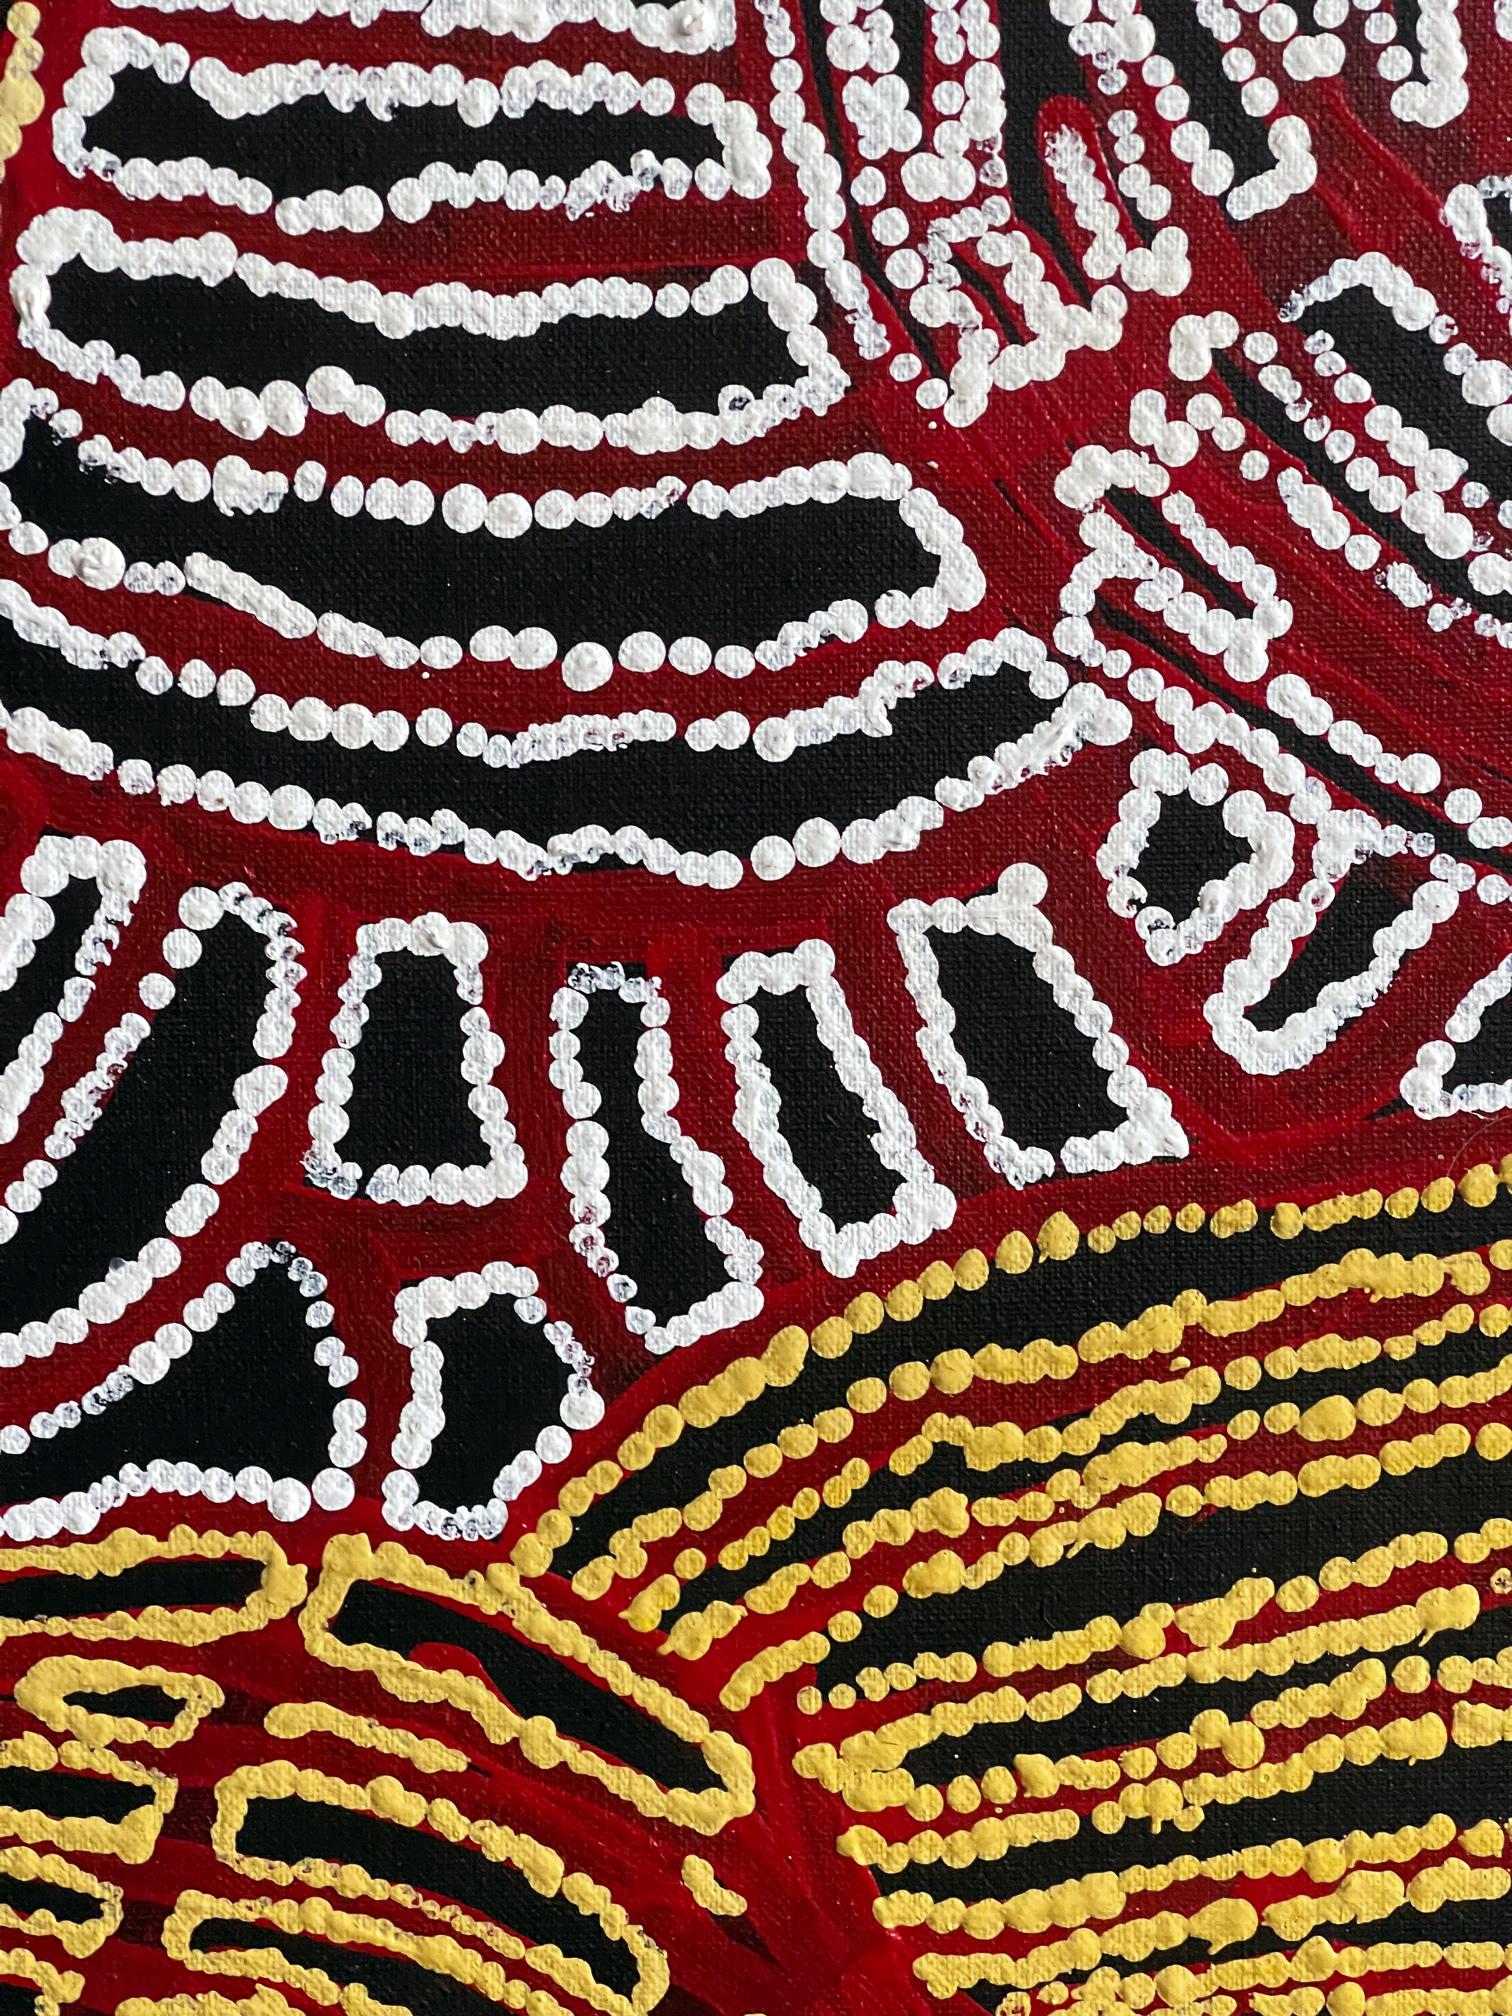 Contemporary Australian Aboriginal Painting by Walangkura Napanangka For Sale 2